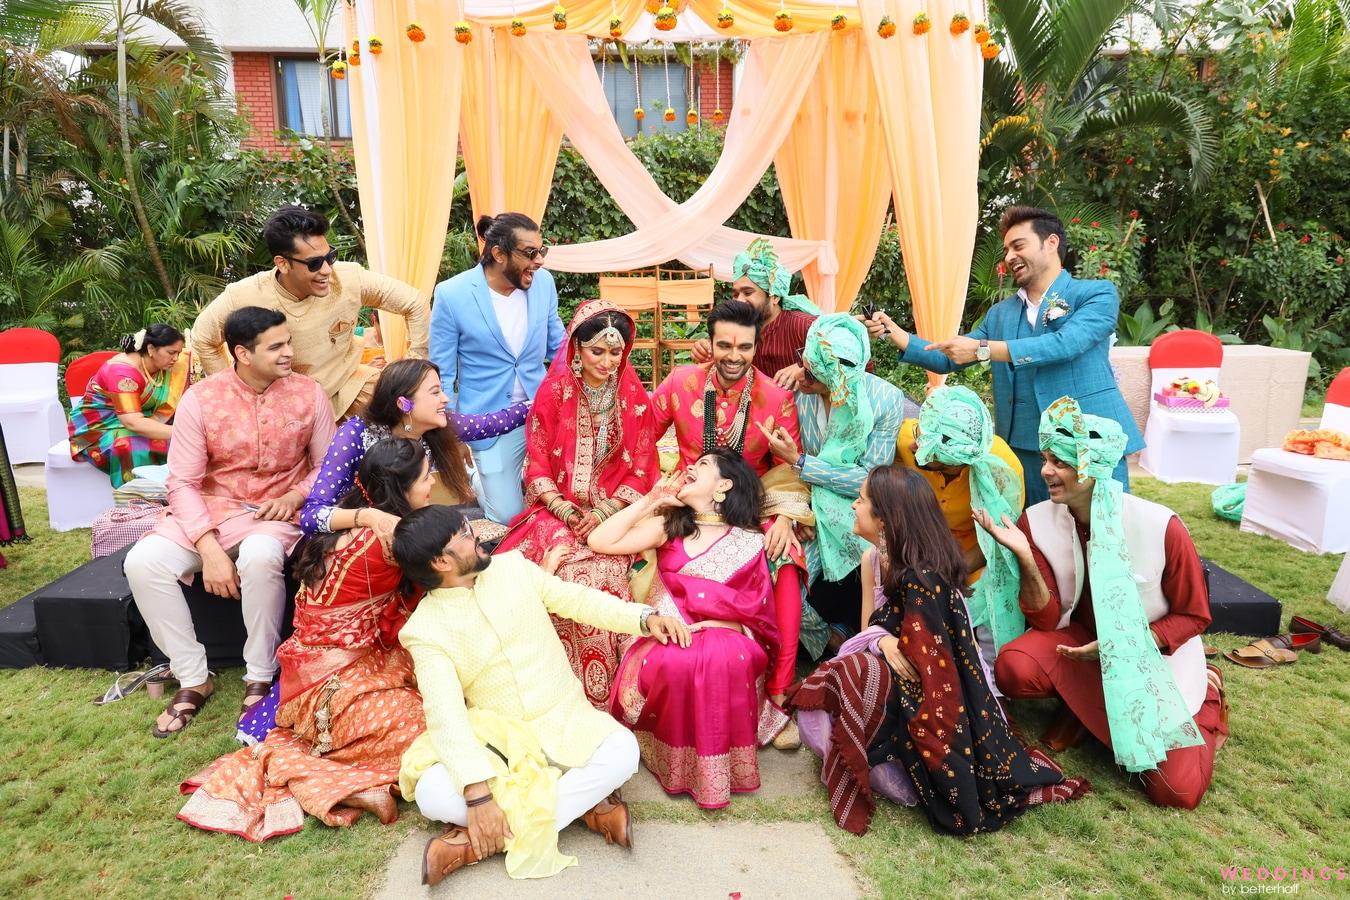 Best Wedding Photographers in Kolkata - Top 25